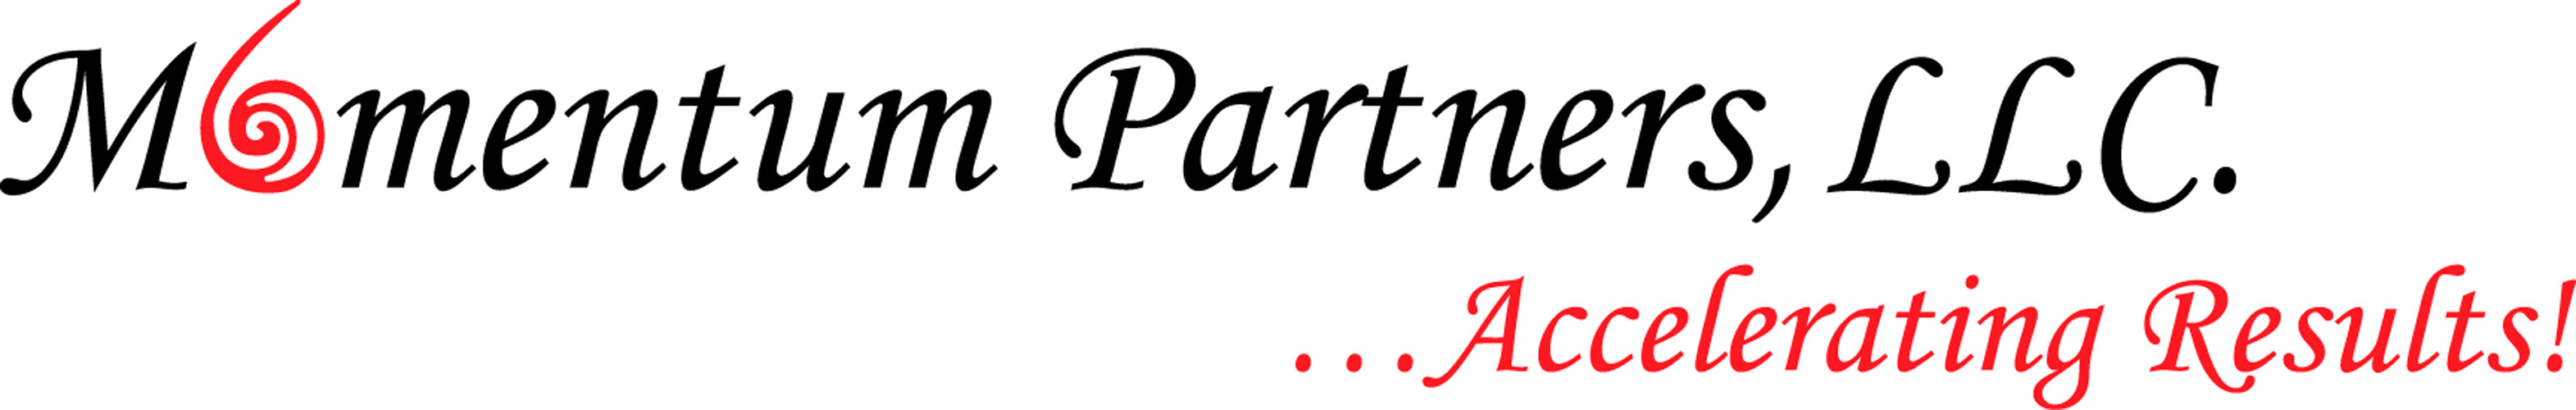 Momentum Partners, LLC logo